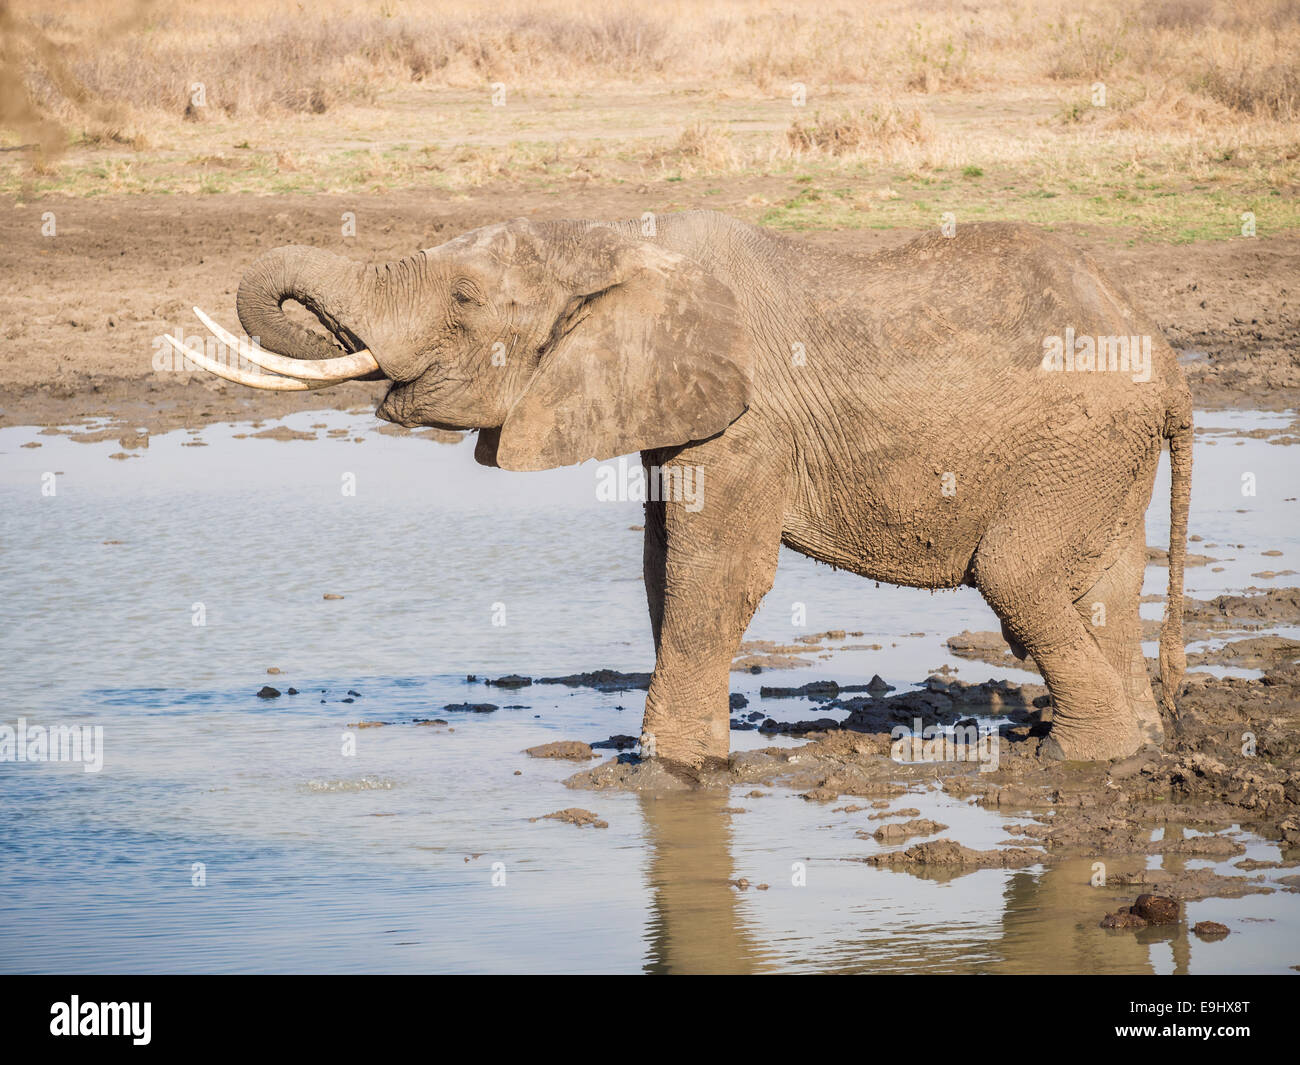 Elephant drinking water in savanna in Tanzania, Africa. Stock Photo